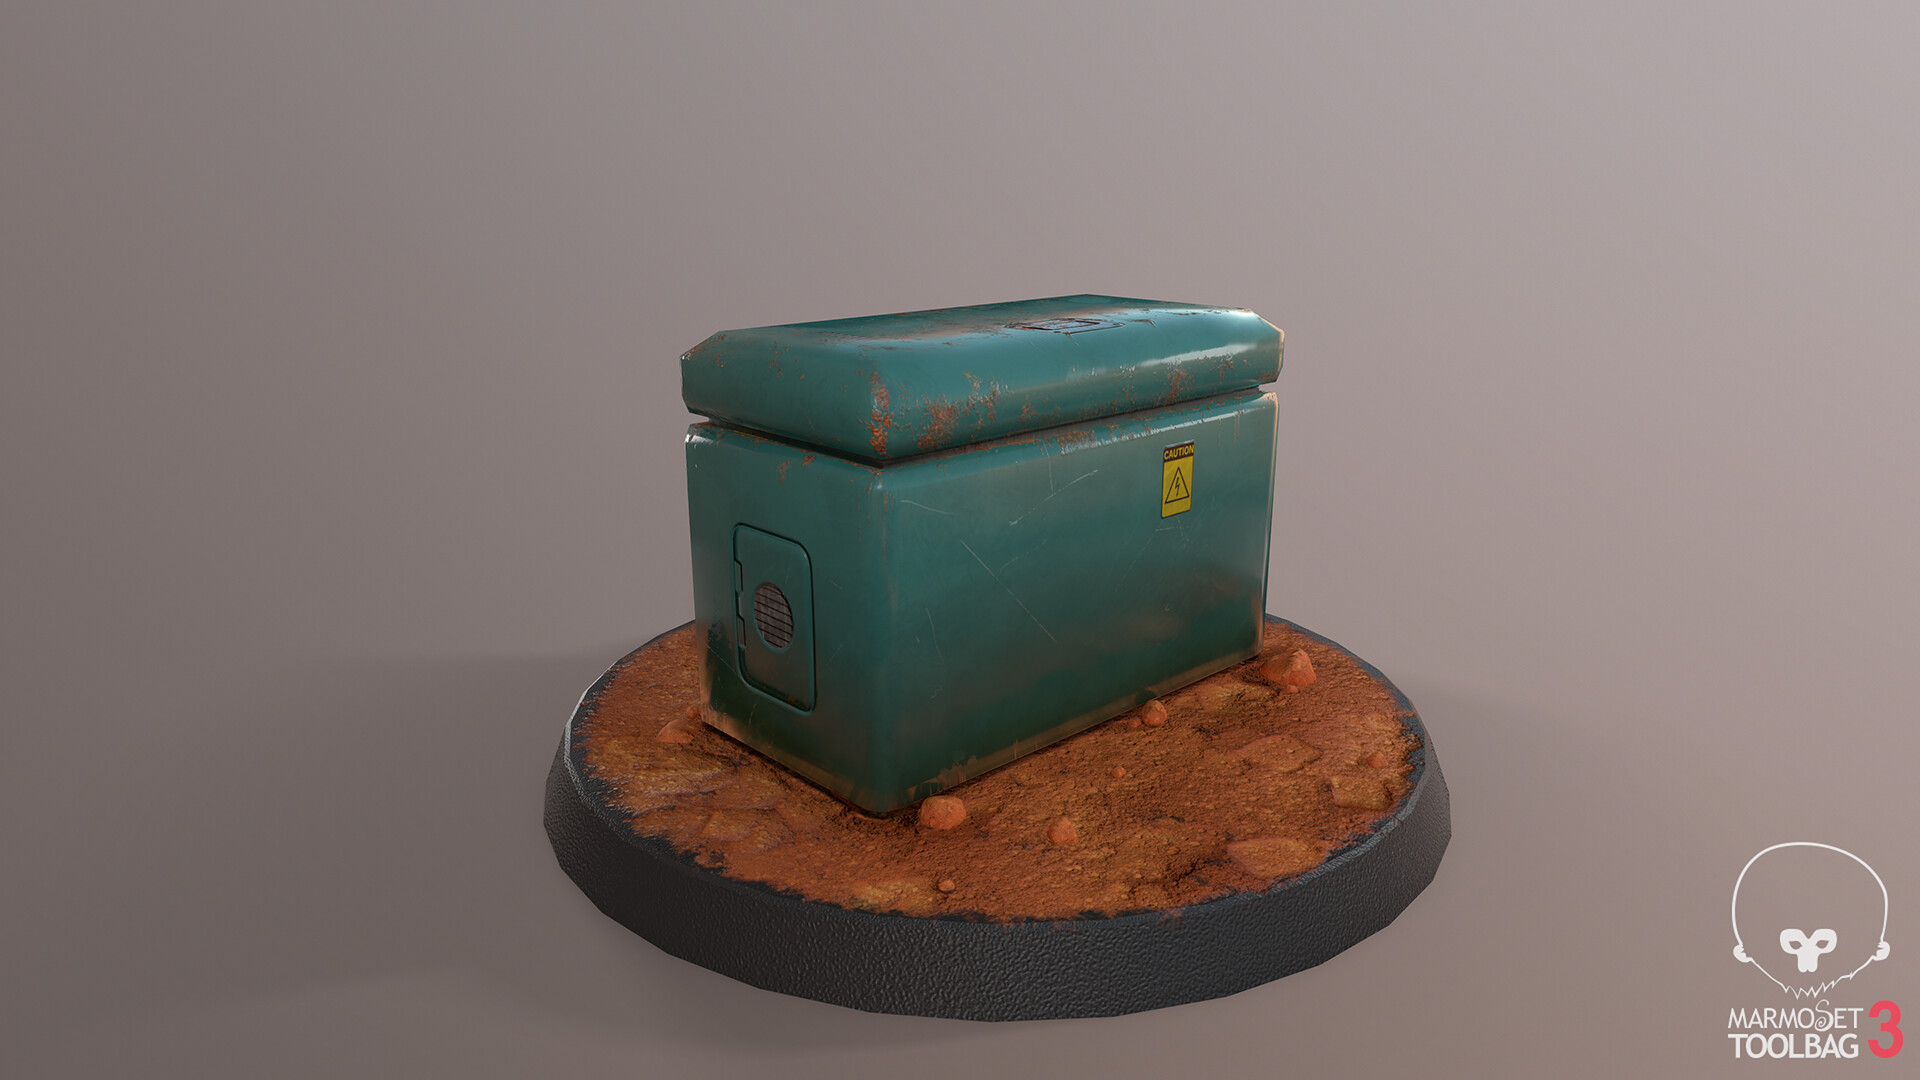 retro loot box